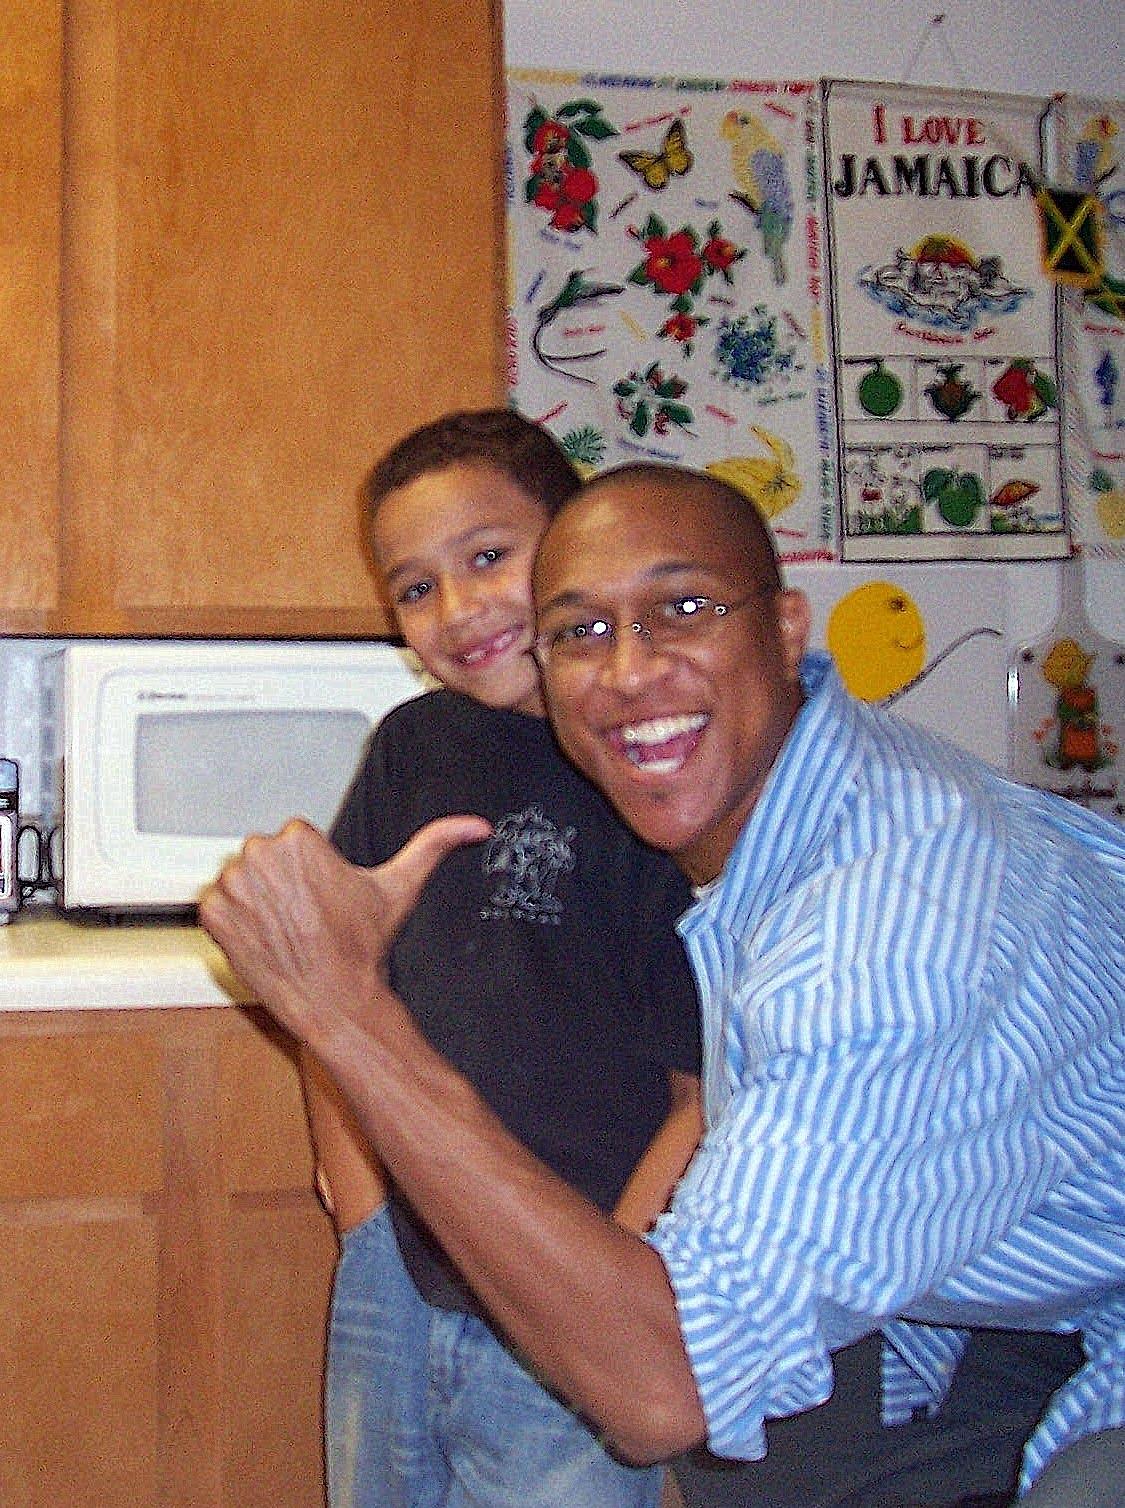  Winston Edmondson with his son, Christian. (Courtesy of <a href="https://www.facebook.com/winston.edmondson">Winston Edmondson</a>)